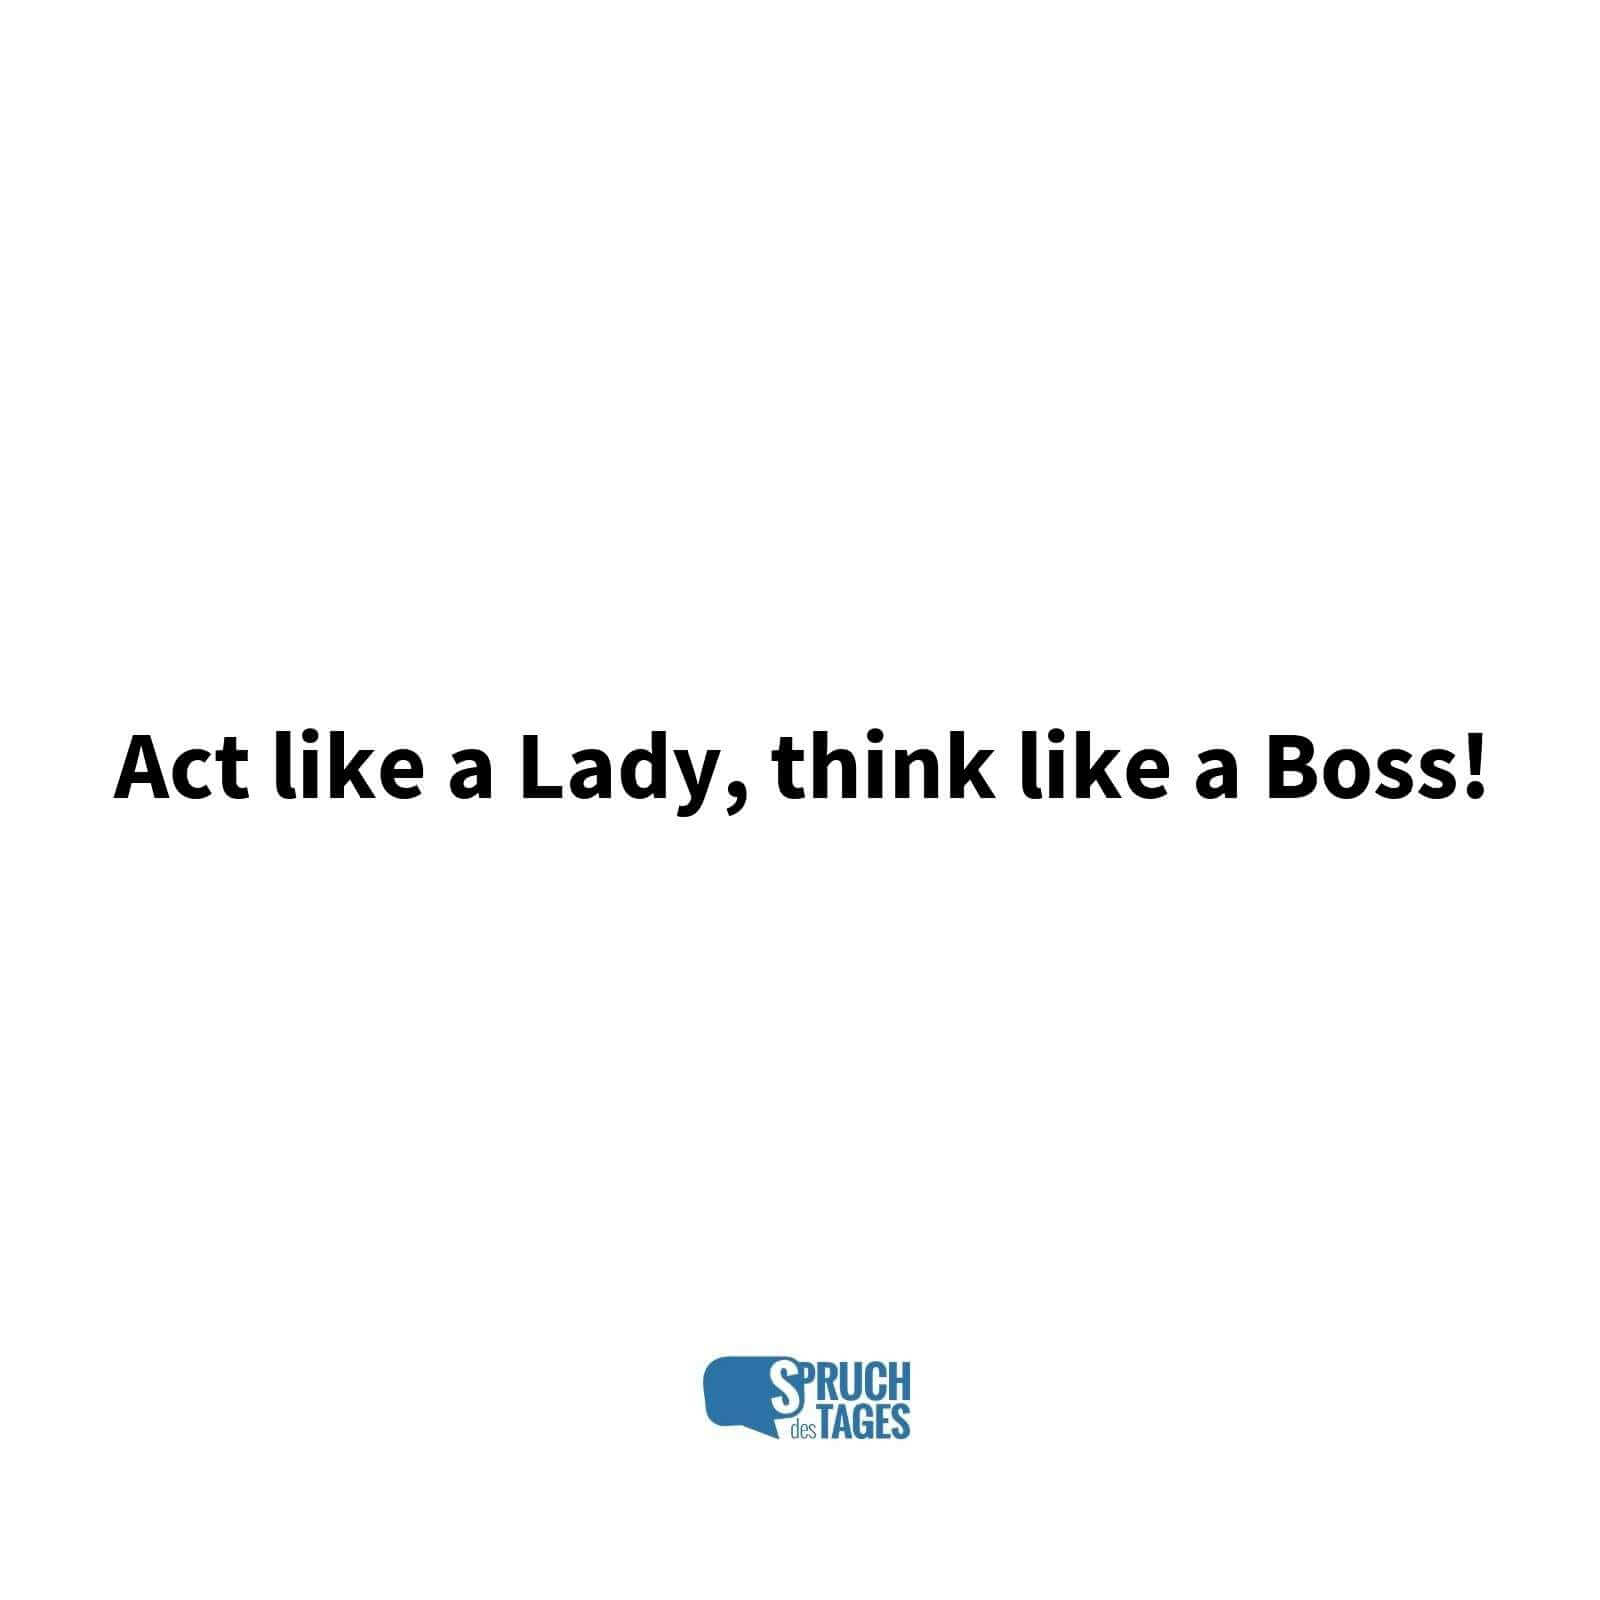 Act like a Lady, think like a Boss!